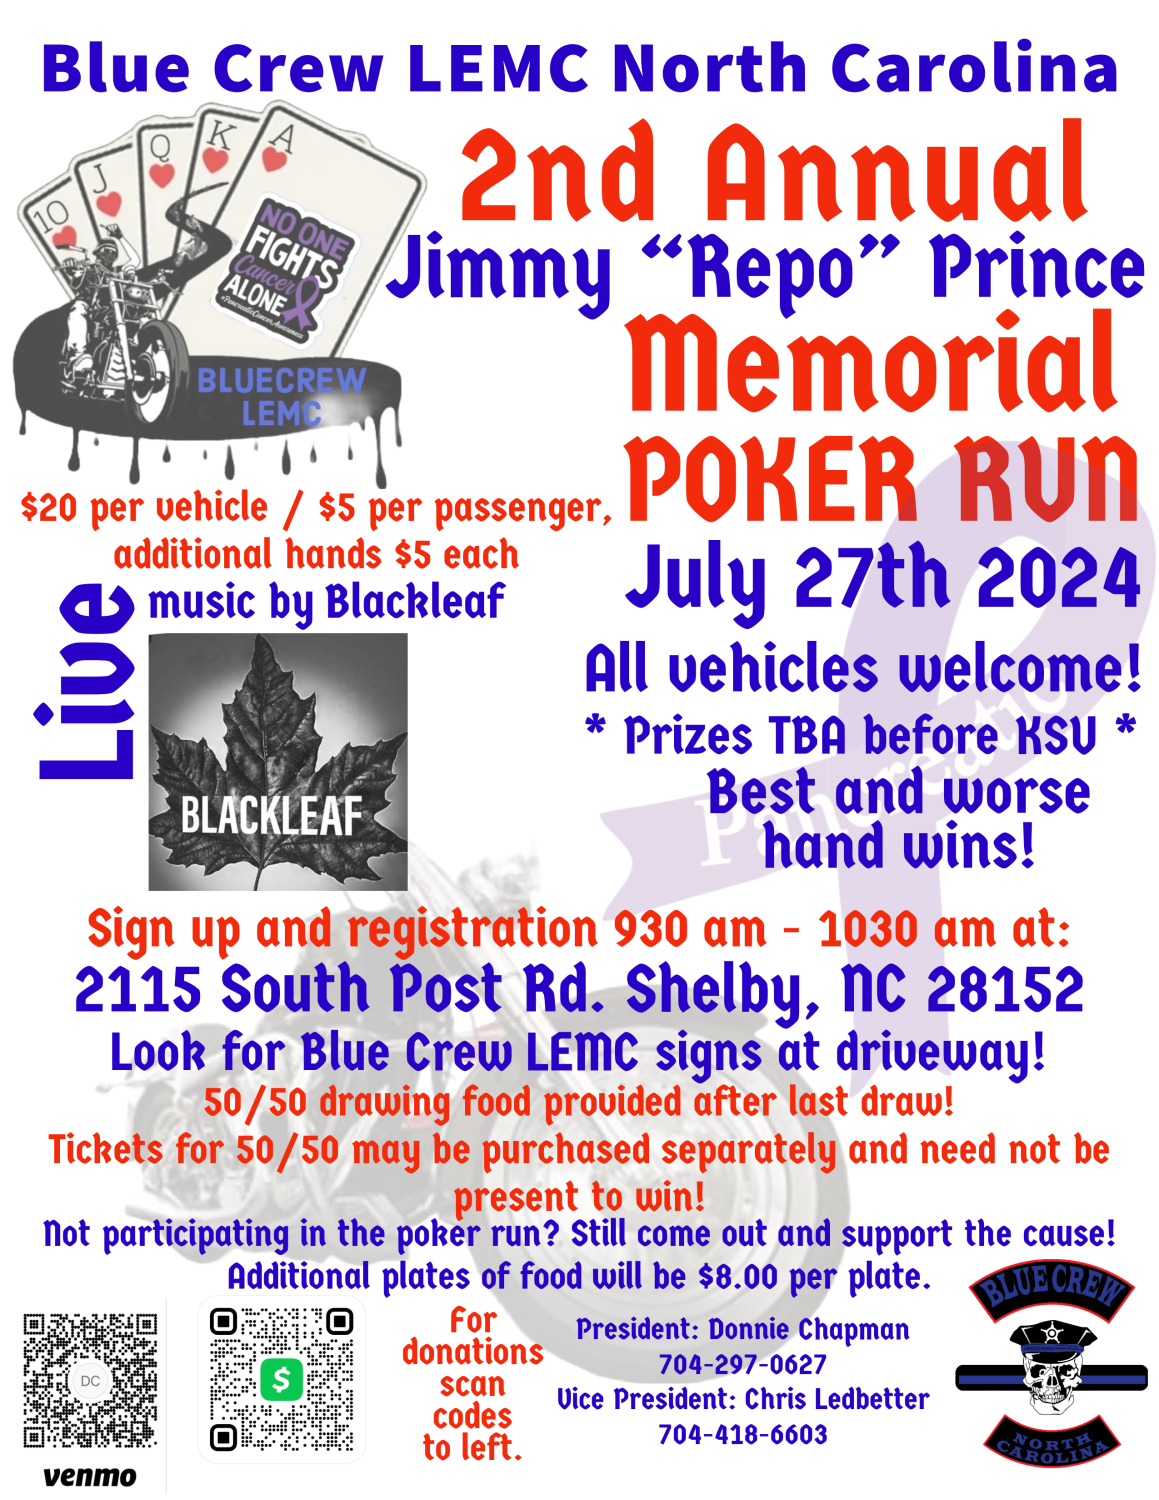 2nd annual Jimmy "REPO" Prince Memorial poker run